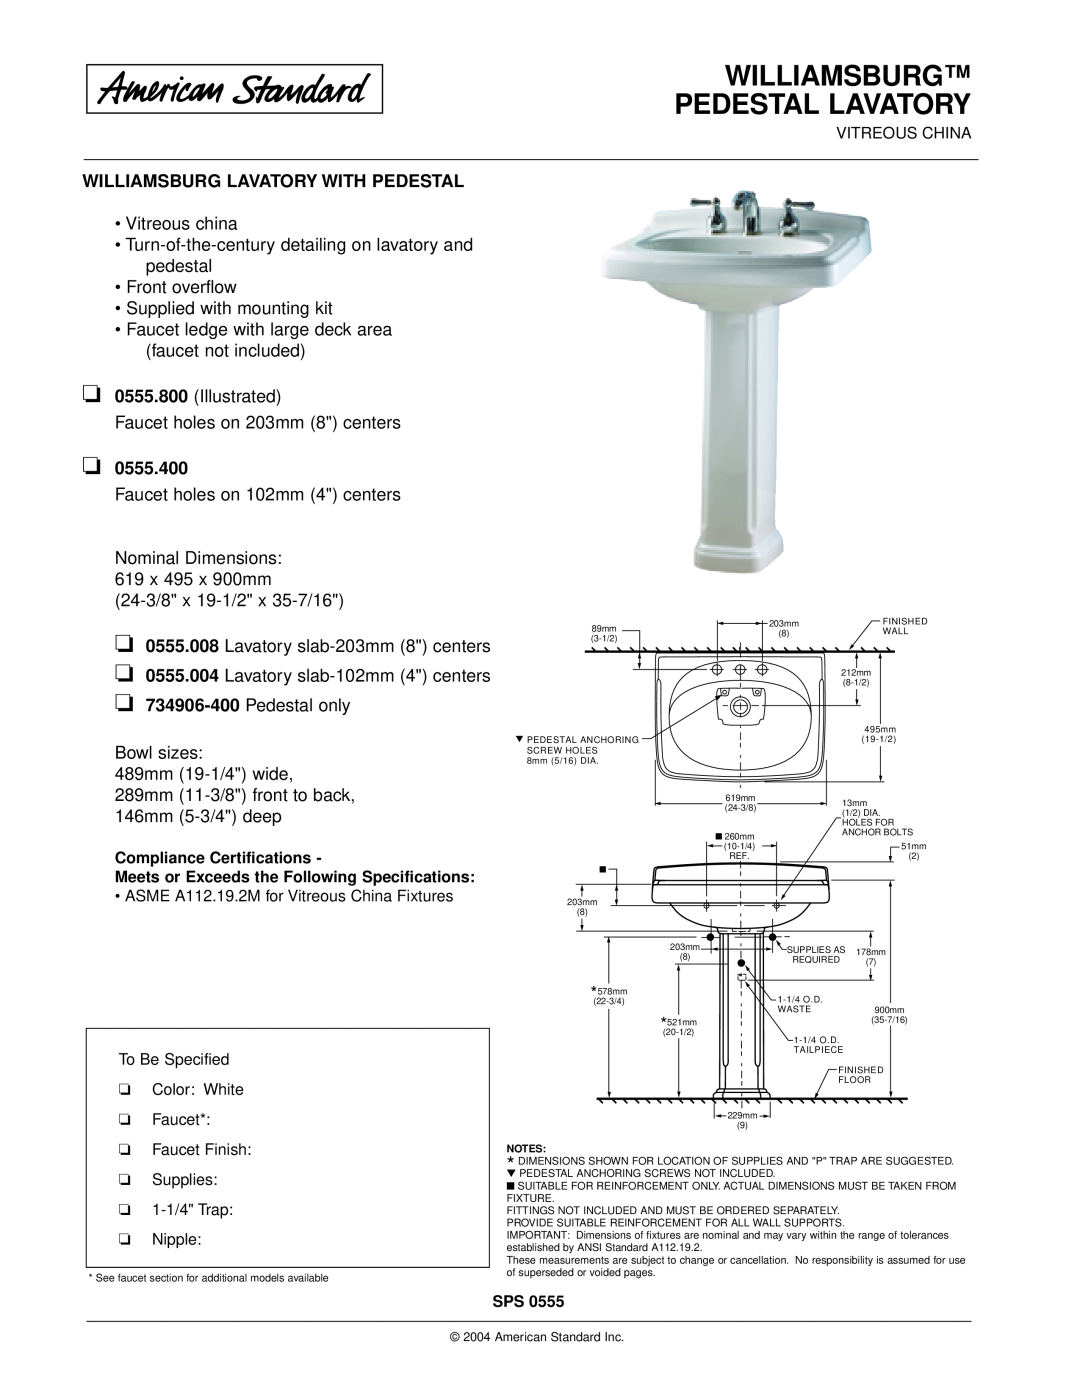 American Standard 0555.400, 0555.800 dimensions Williamsburg Pedestal Lavatory, Williamsburg Lavatory With Pedestal 